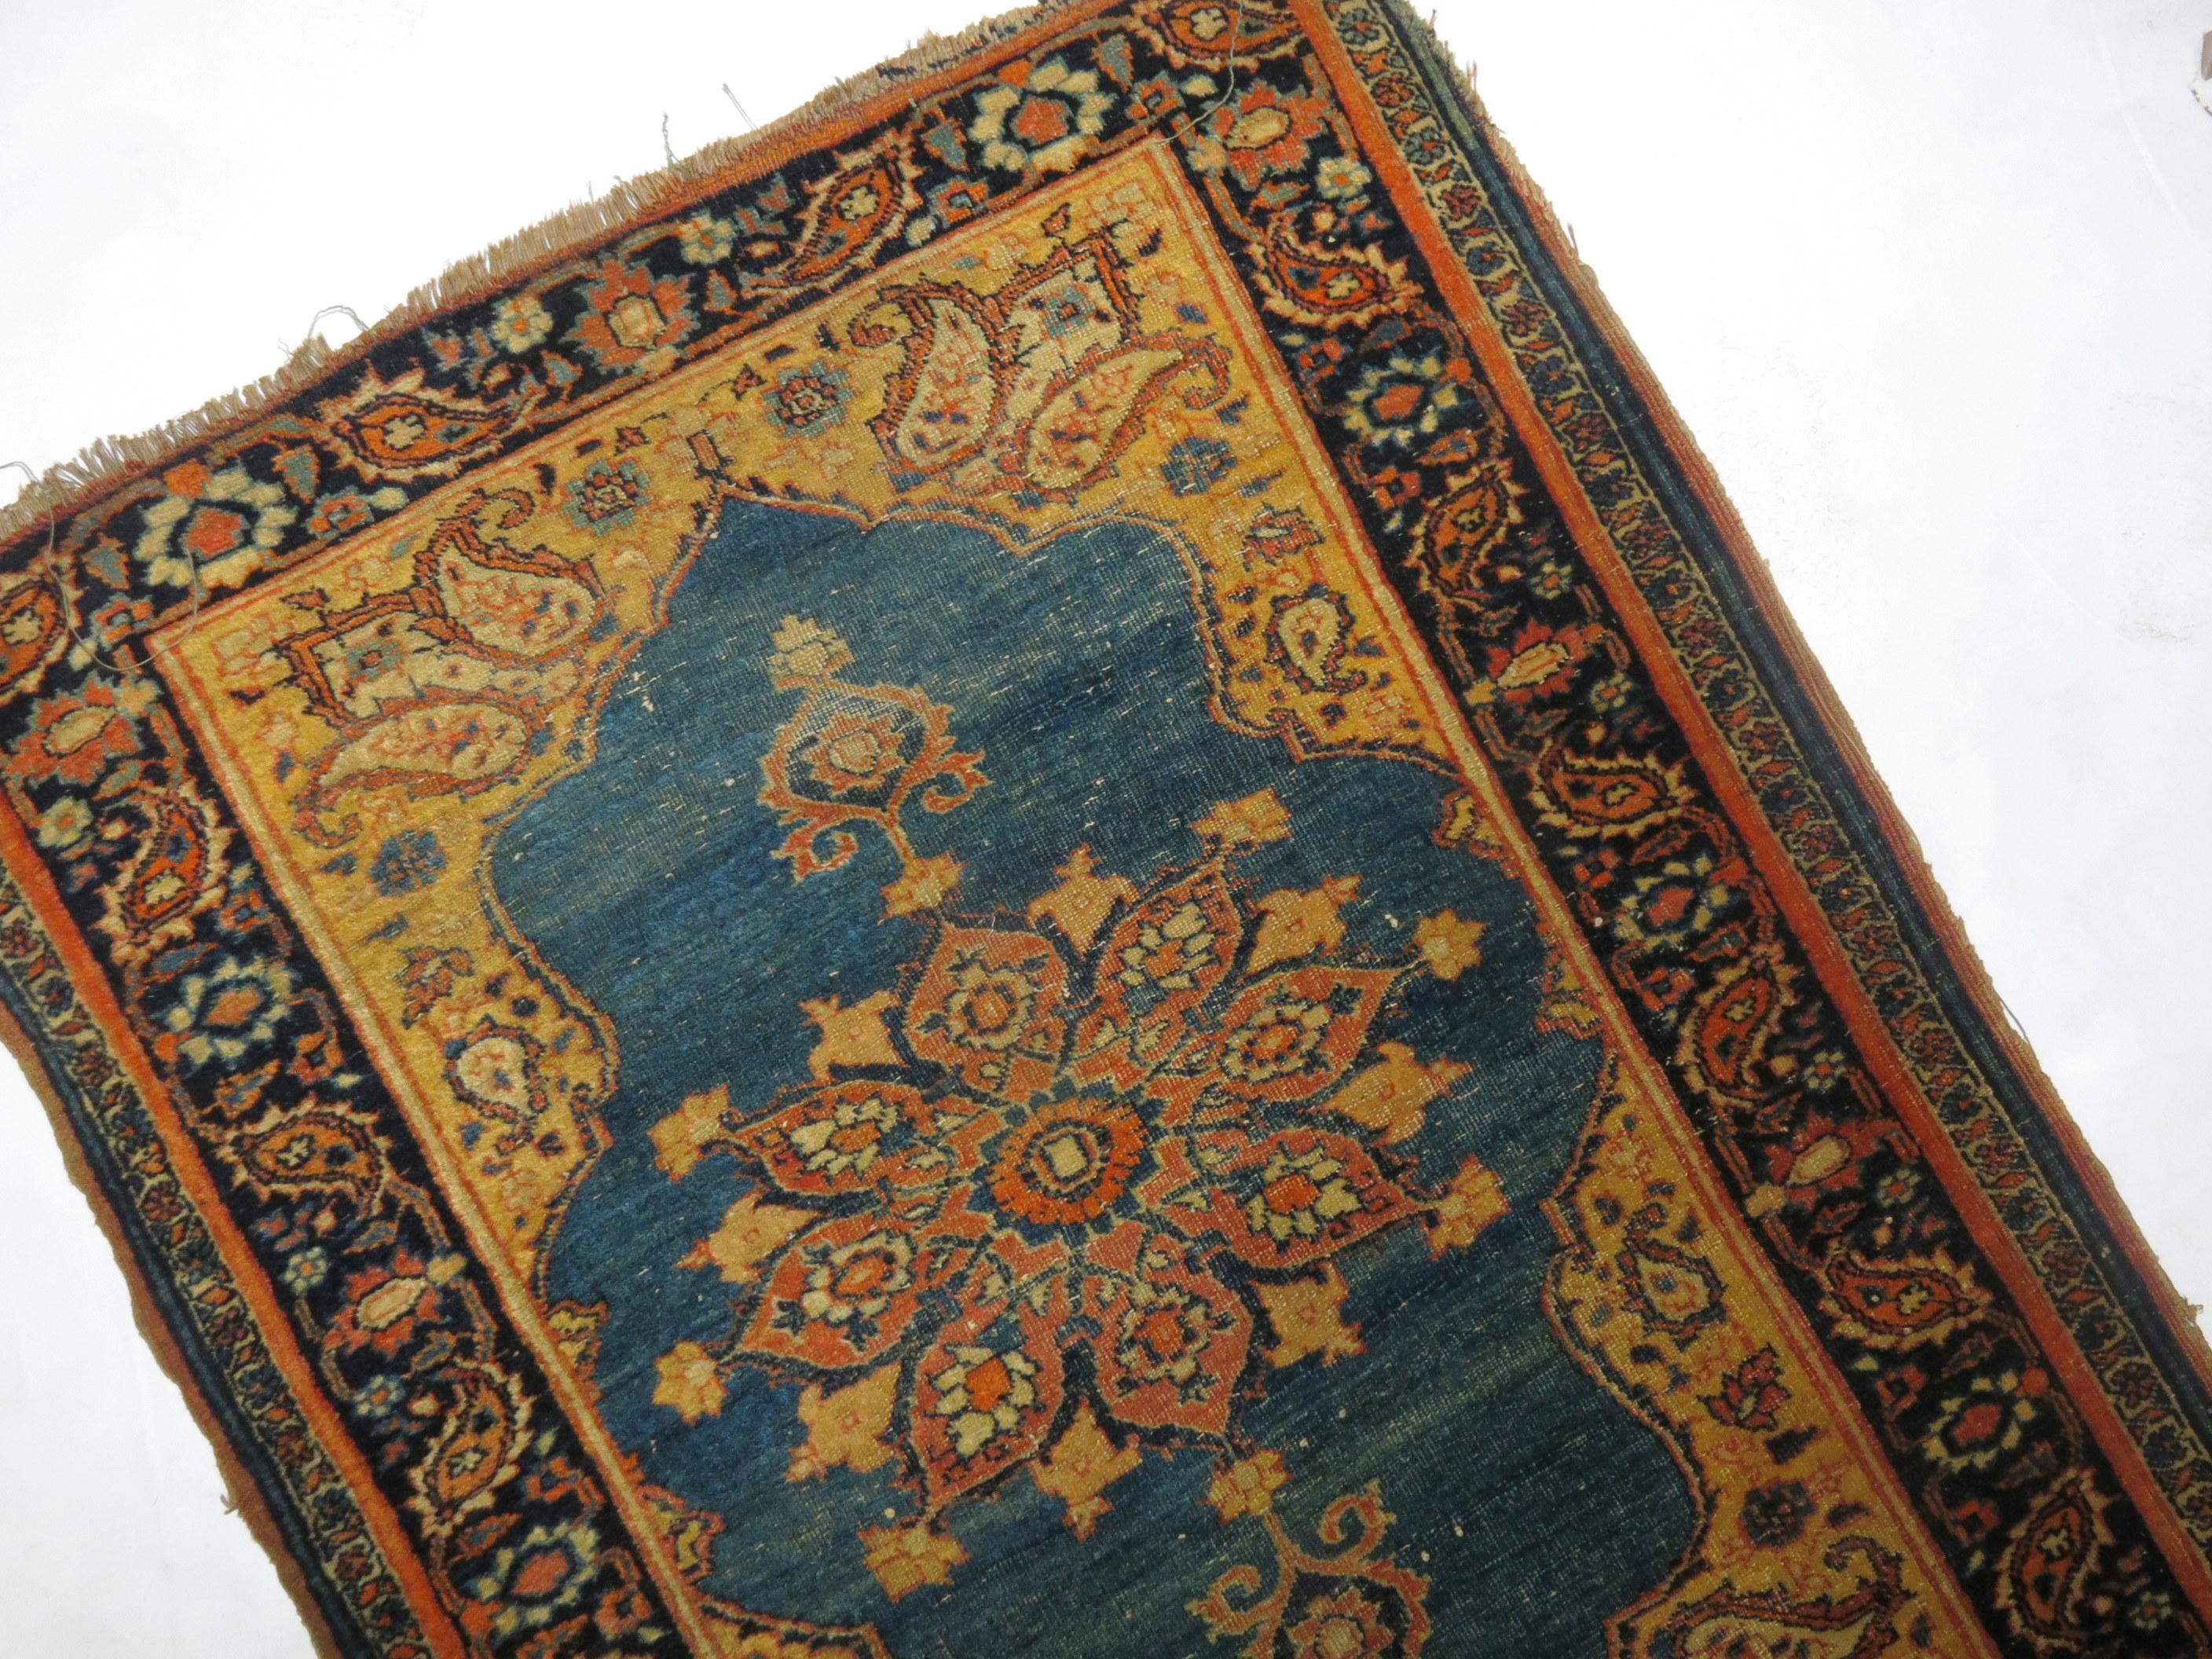 Hand-Woven 19th Century Persian Hadji Jali Li Tabriz Poshtee Rug